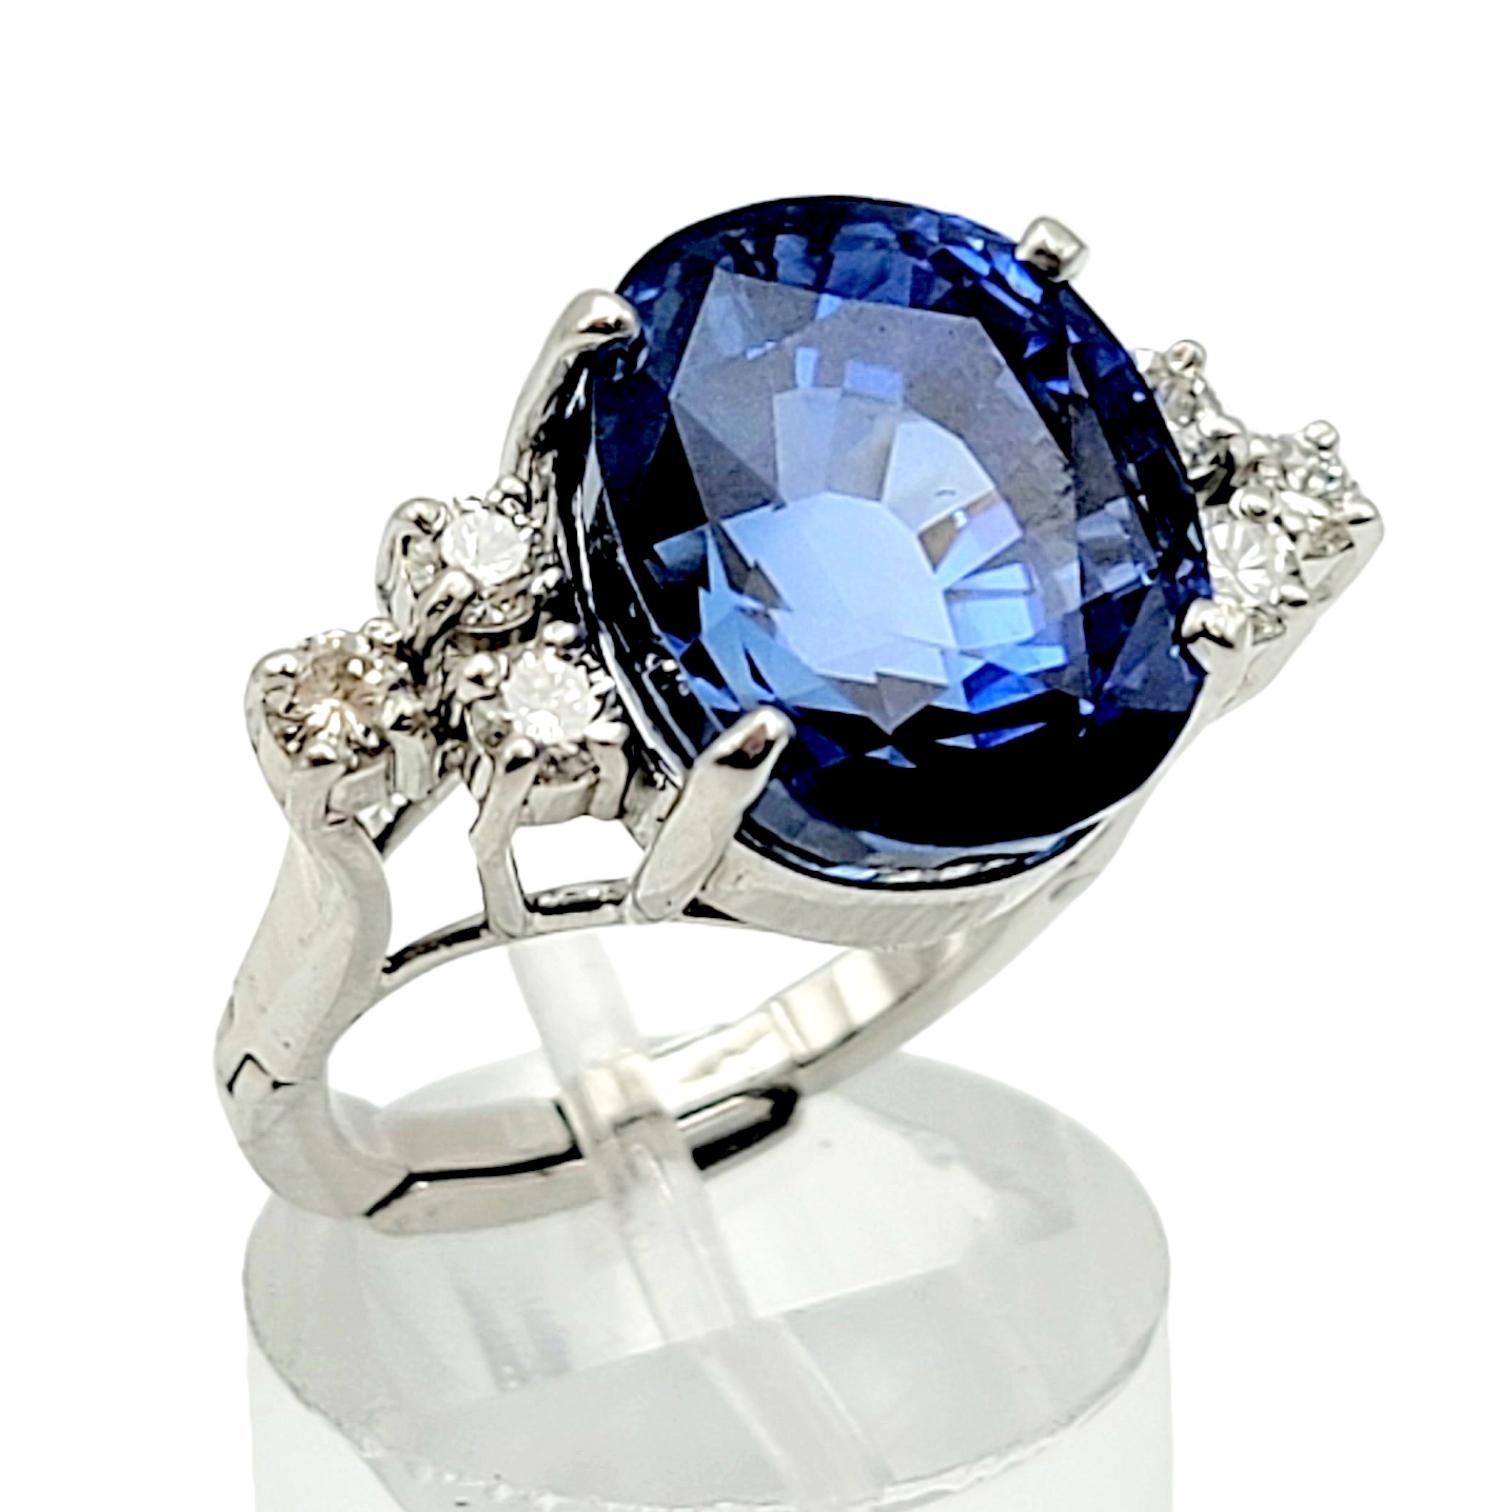 Impressive 15.35 Carat Rare Untreated Oval Ceylon Sapphire and Diamond Ring For Sale 4